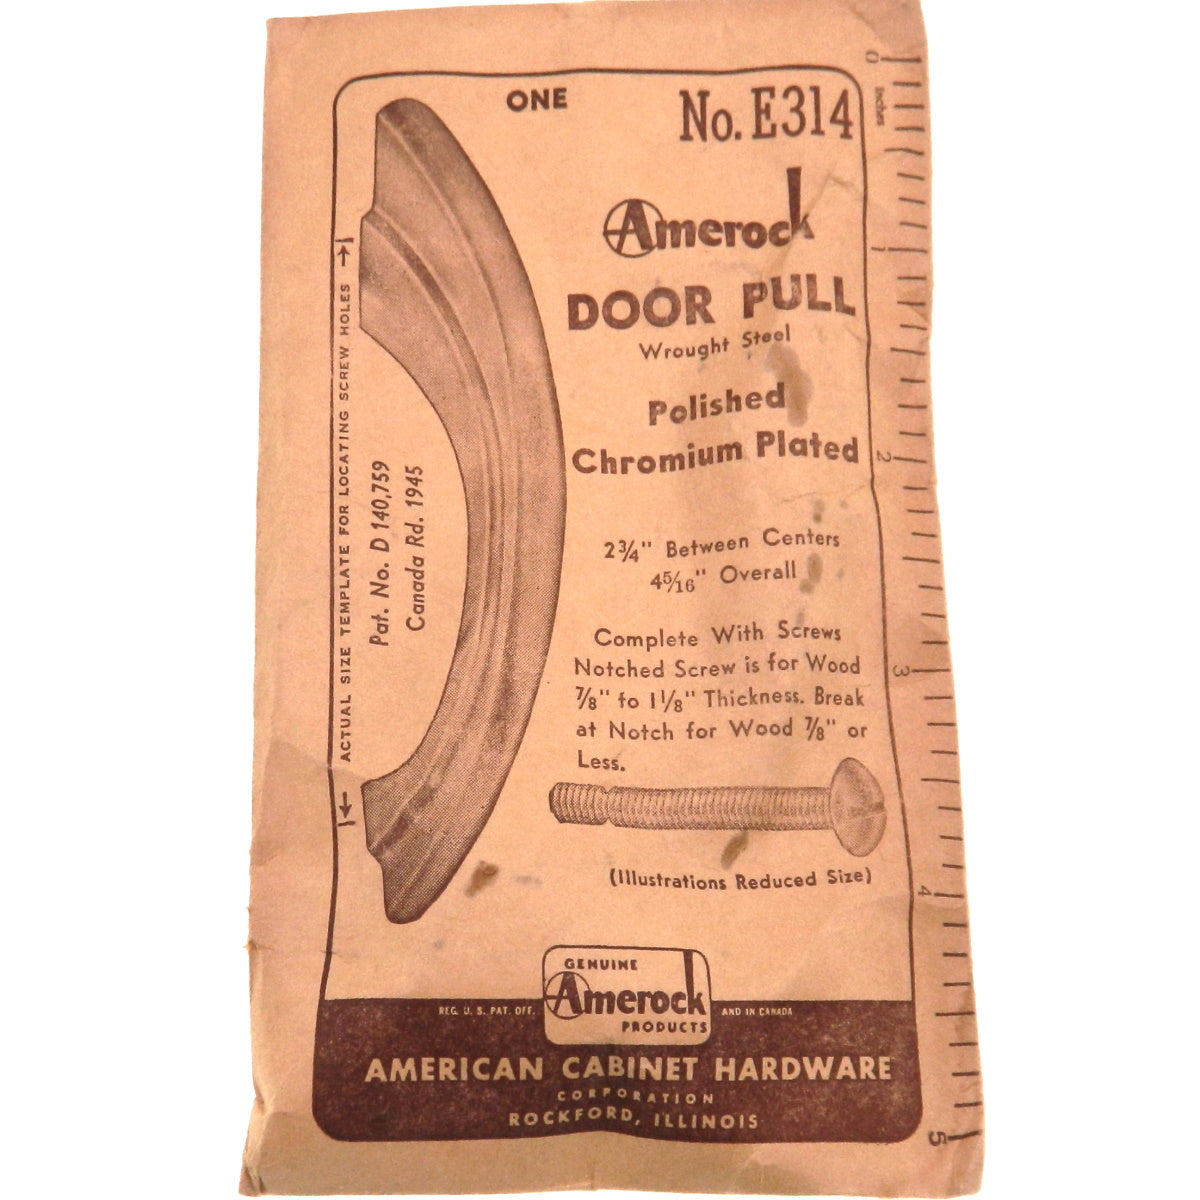 Amerock Vintage Polished Chromium 2 3/4"cc Arch Pull Cabinet Door Handle EO314